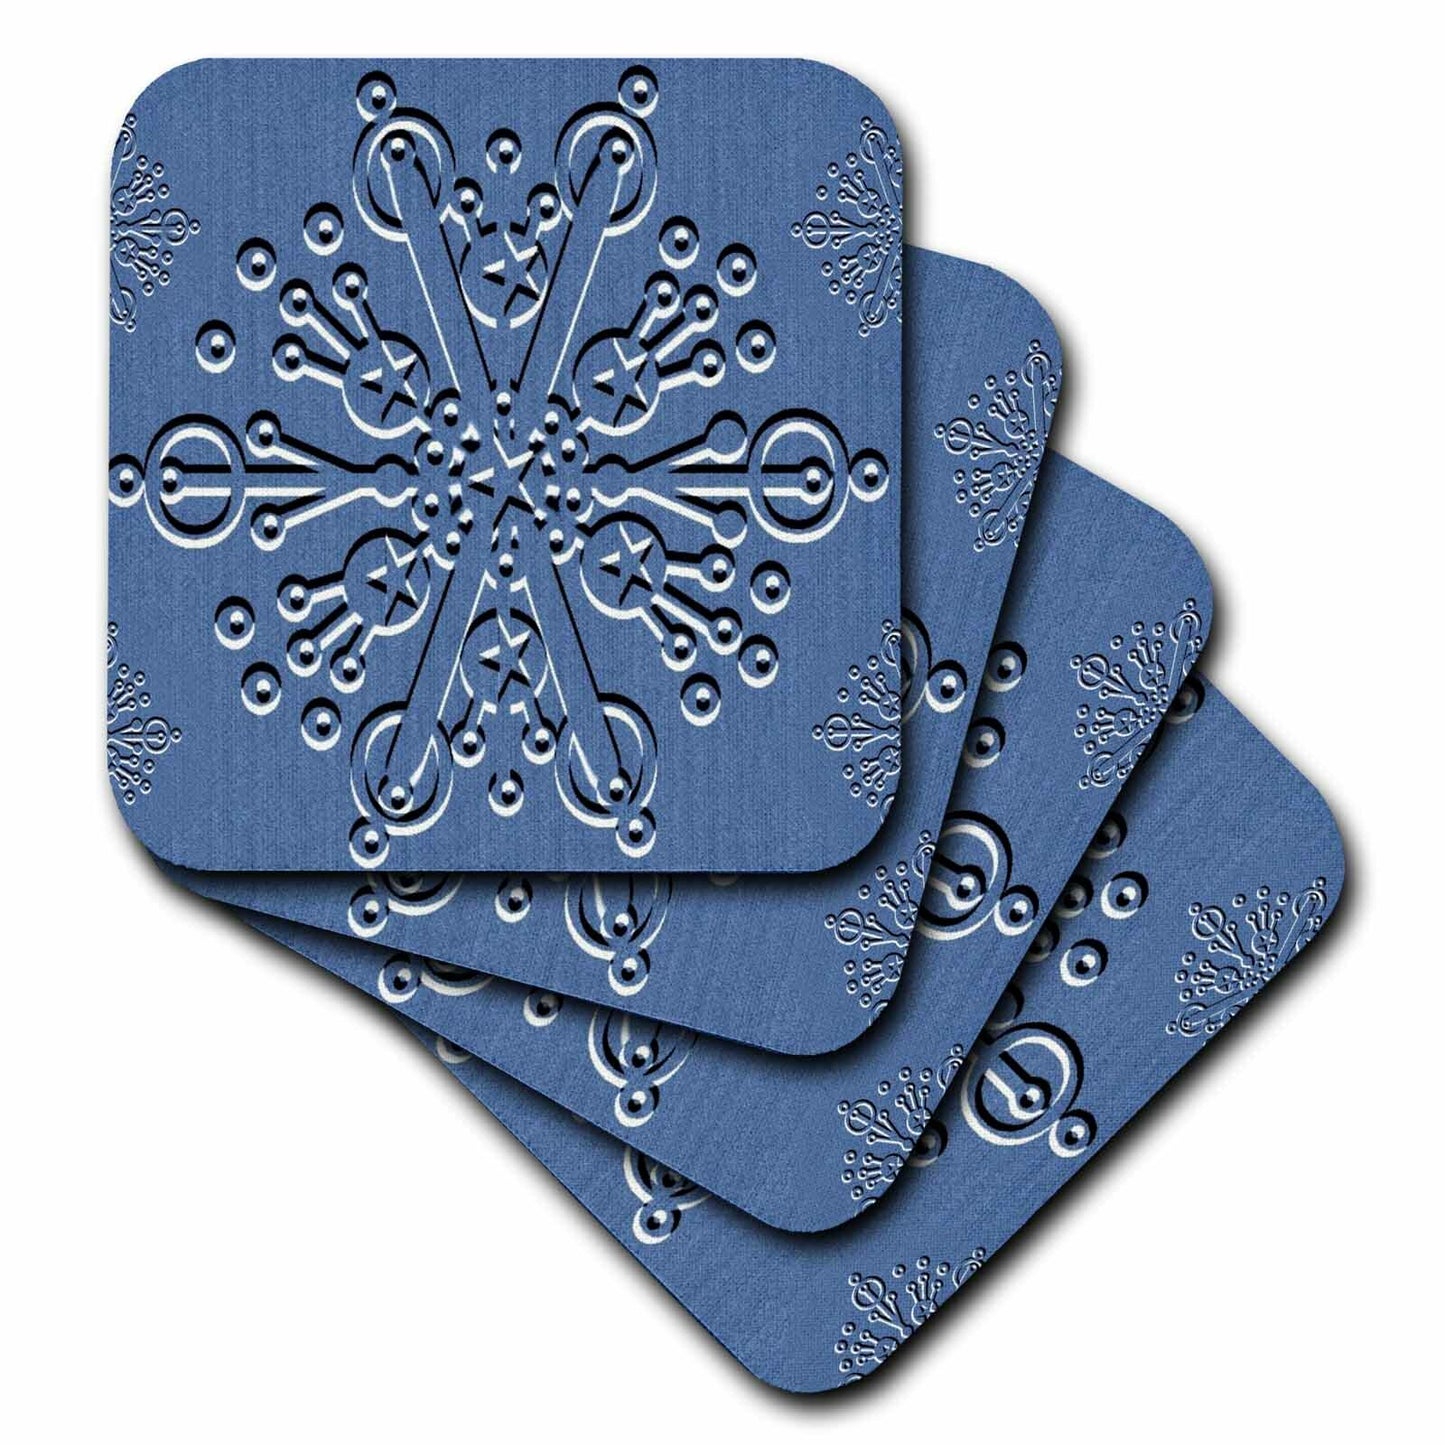 Ceramic Snowflake Themed Tile Coasters